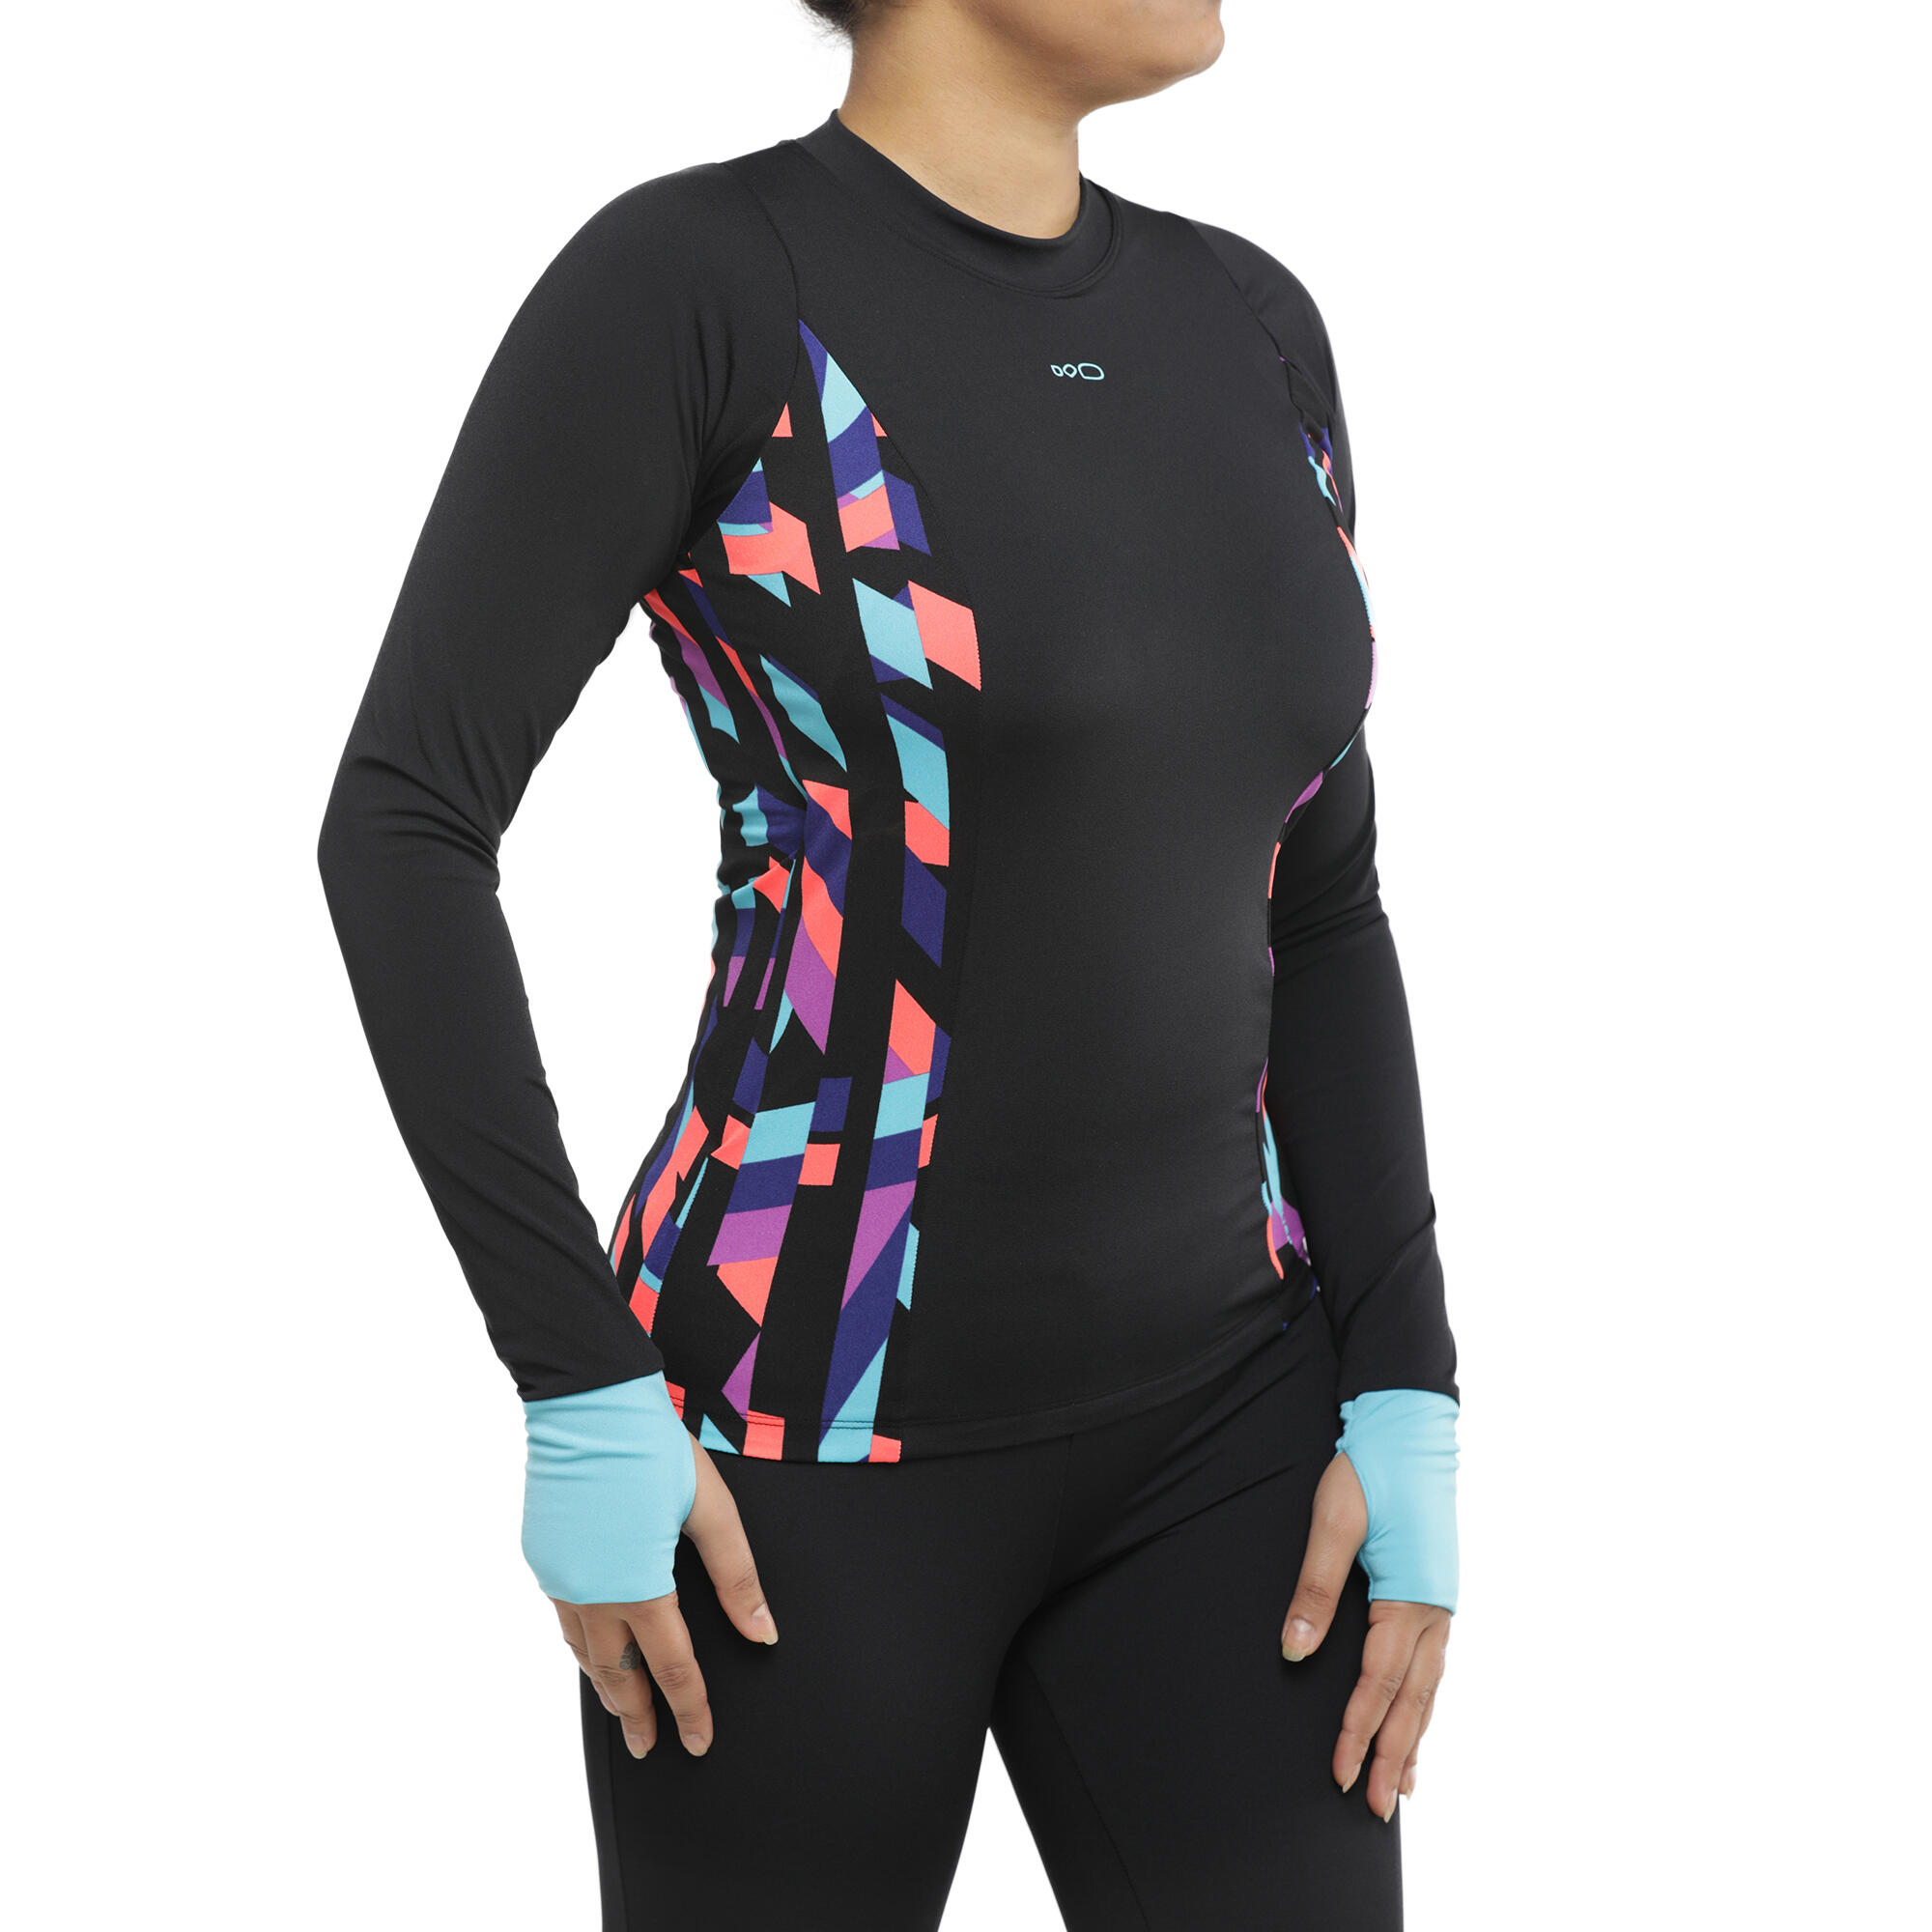 decathlon long sleeve swimsuit